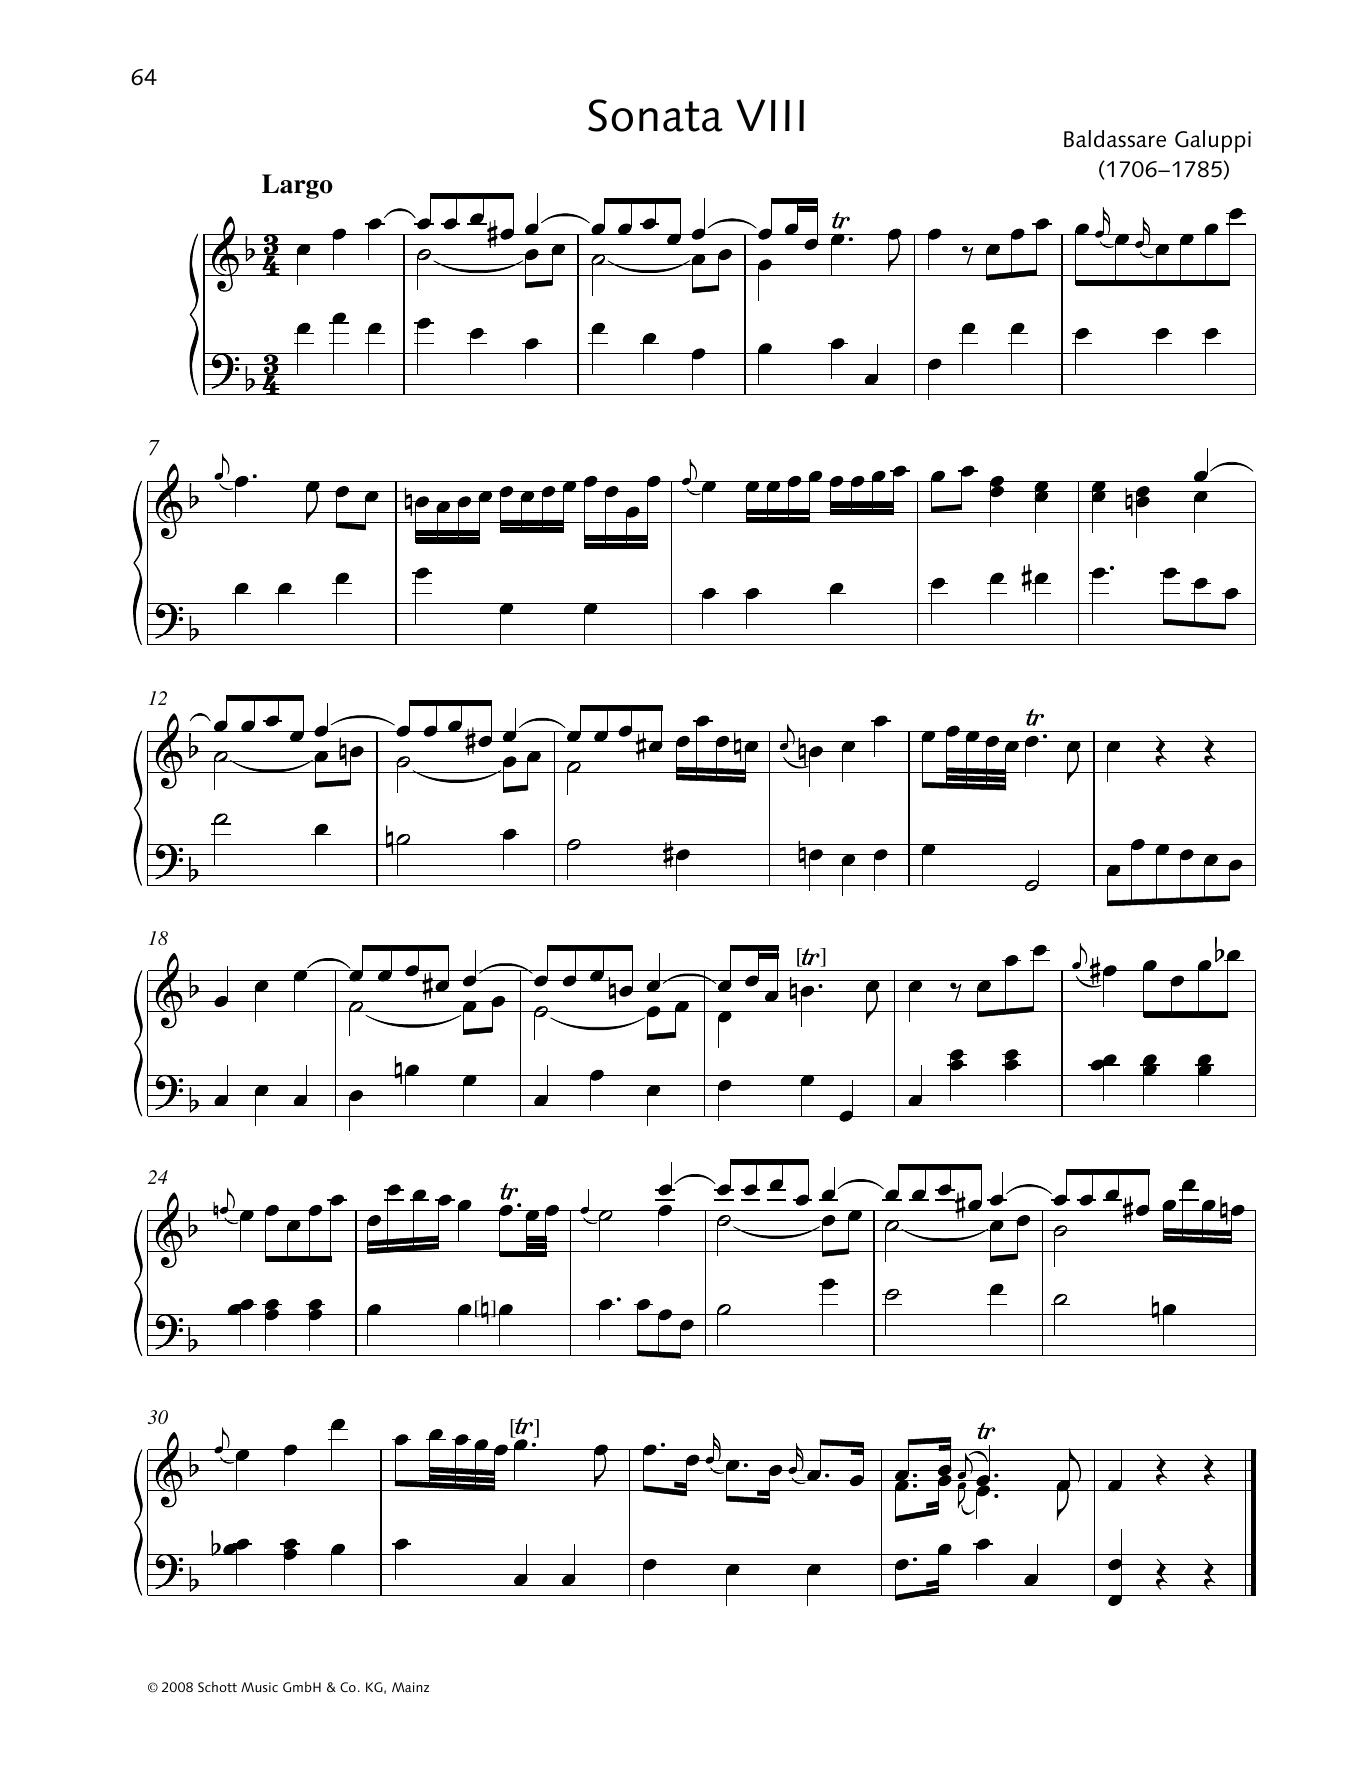 Baldassare Galuppi Sonata VIII F major Sheet Music Notes & Chords for Piano Solo - Download or Print PDF